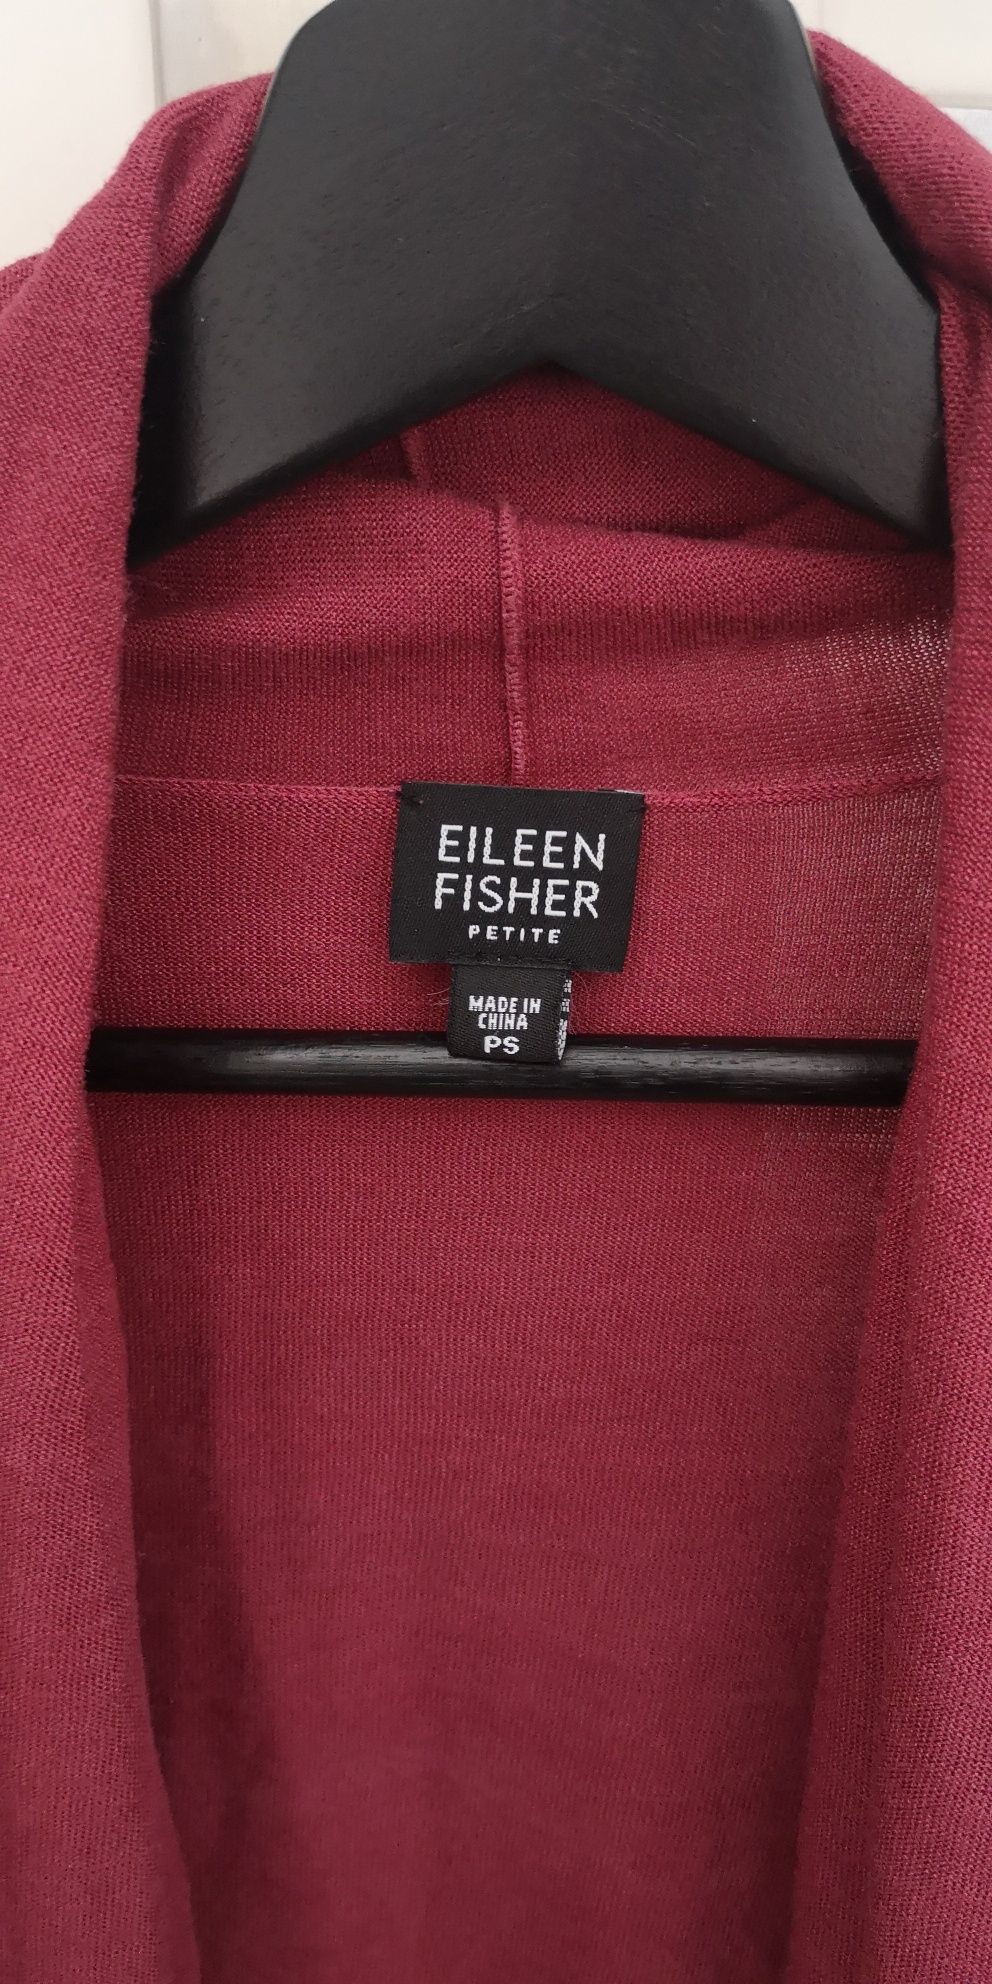 Bordowy sweterek Eileen Fisher.